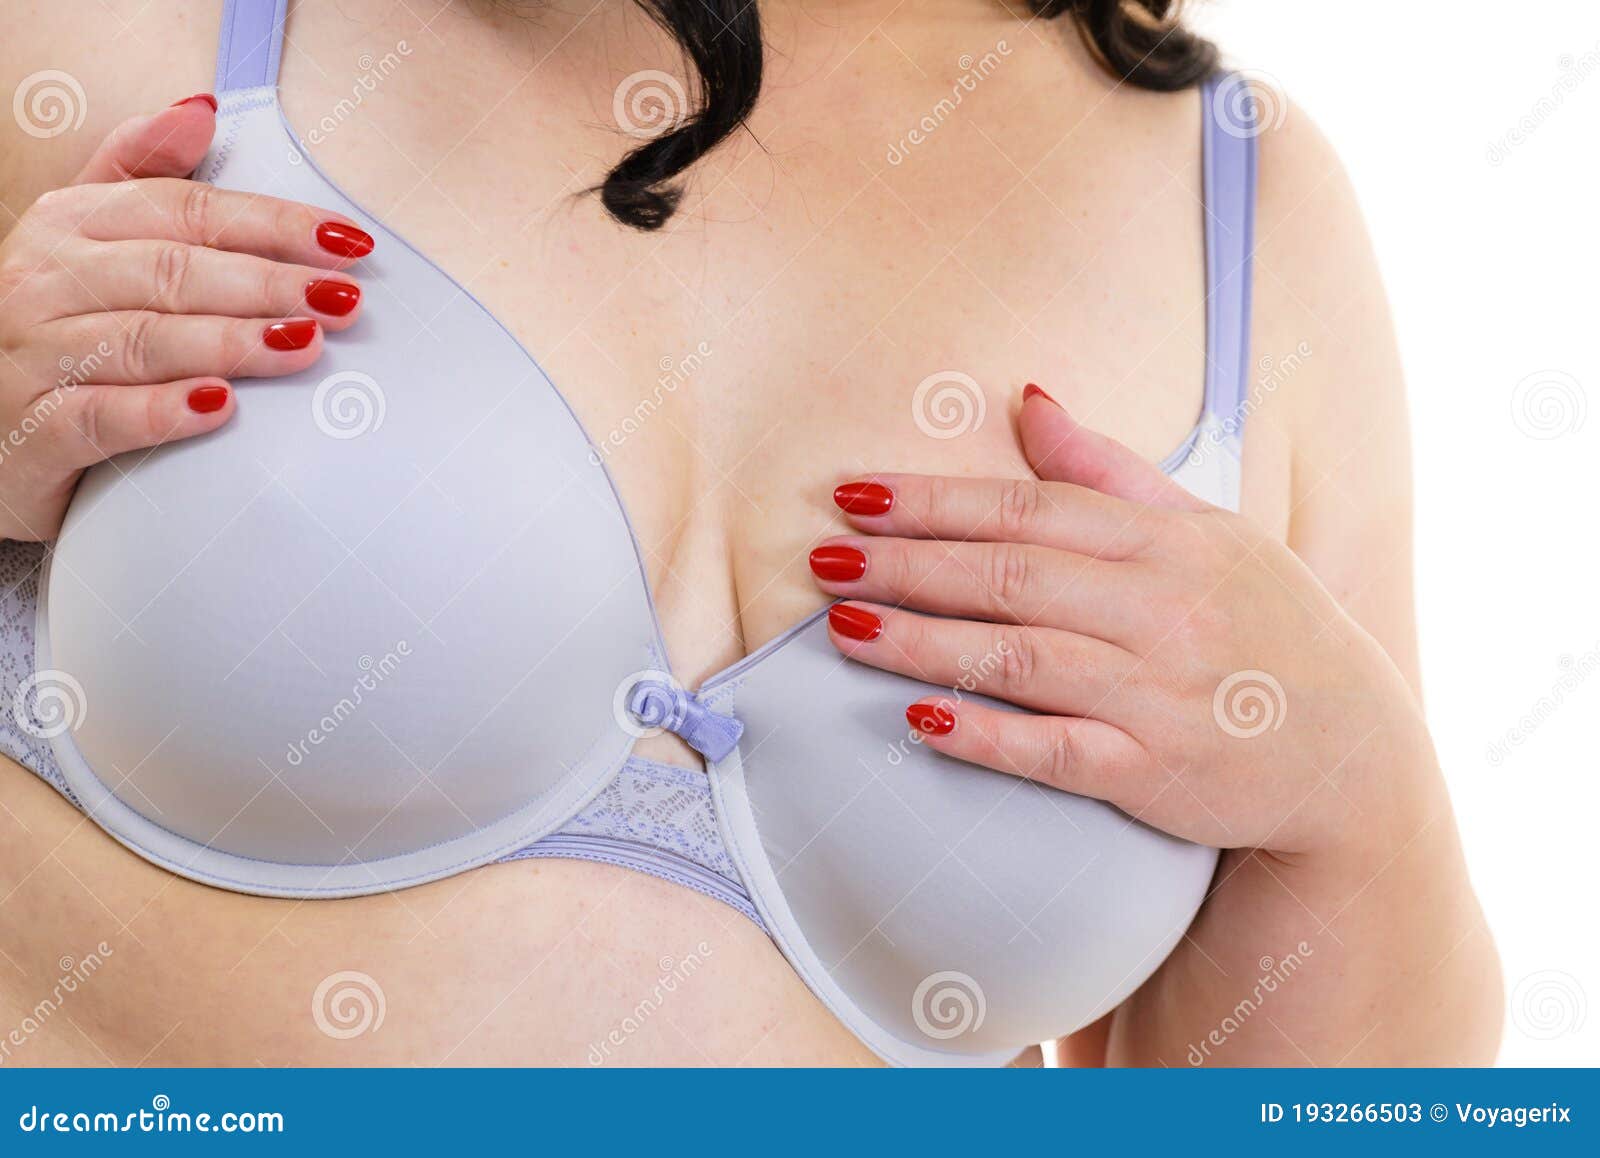 Fat Woman Big Breast Wearing Bra Stock Image - Image of scooping,  brafitting: 193266503